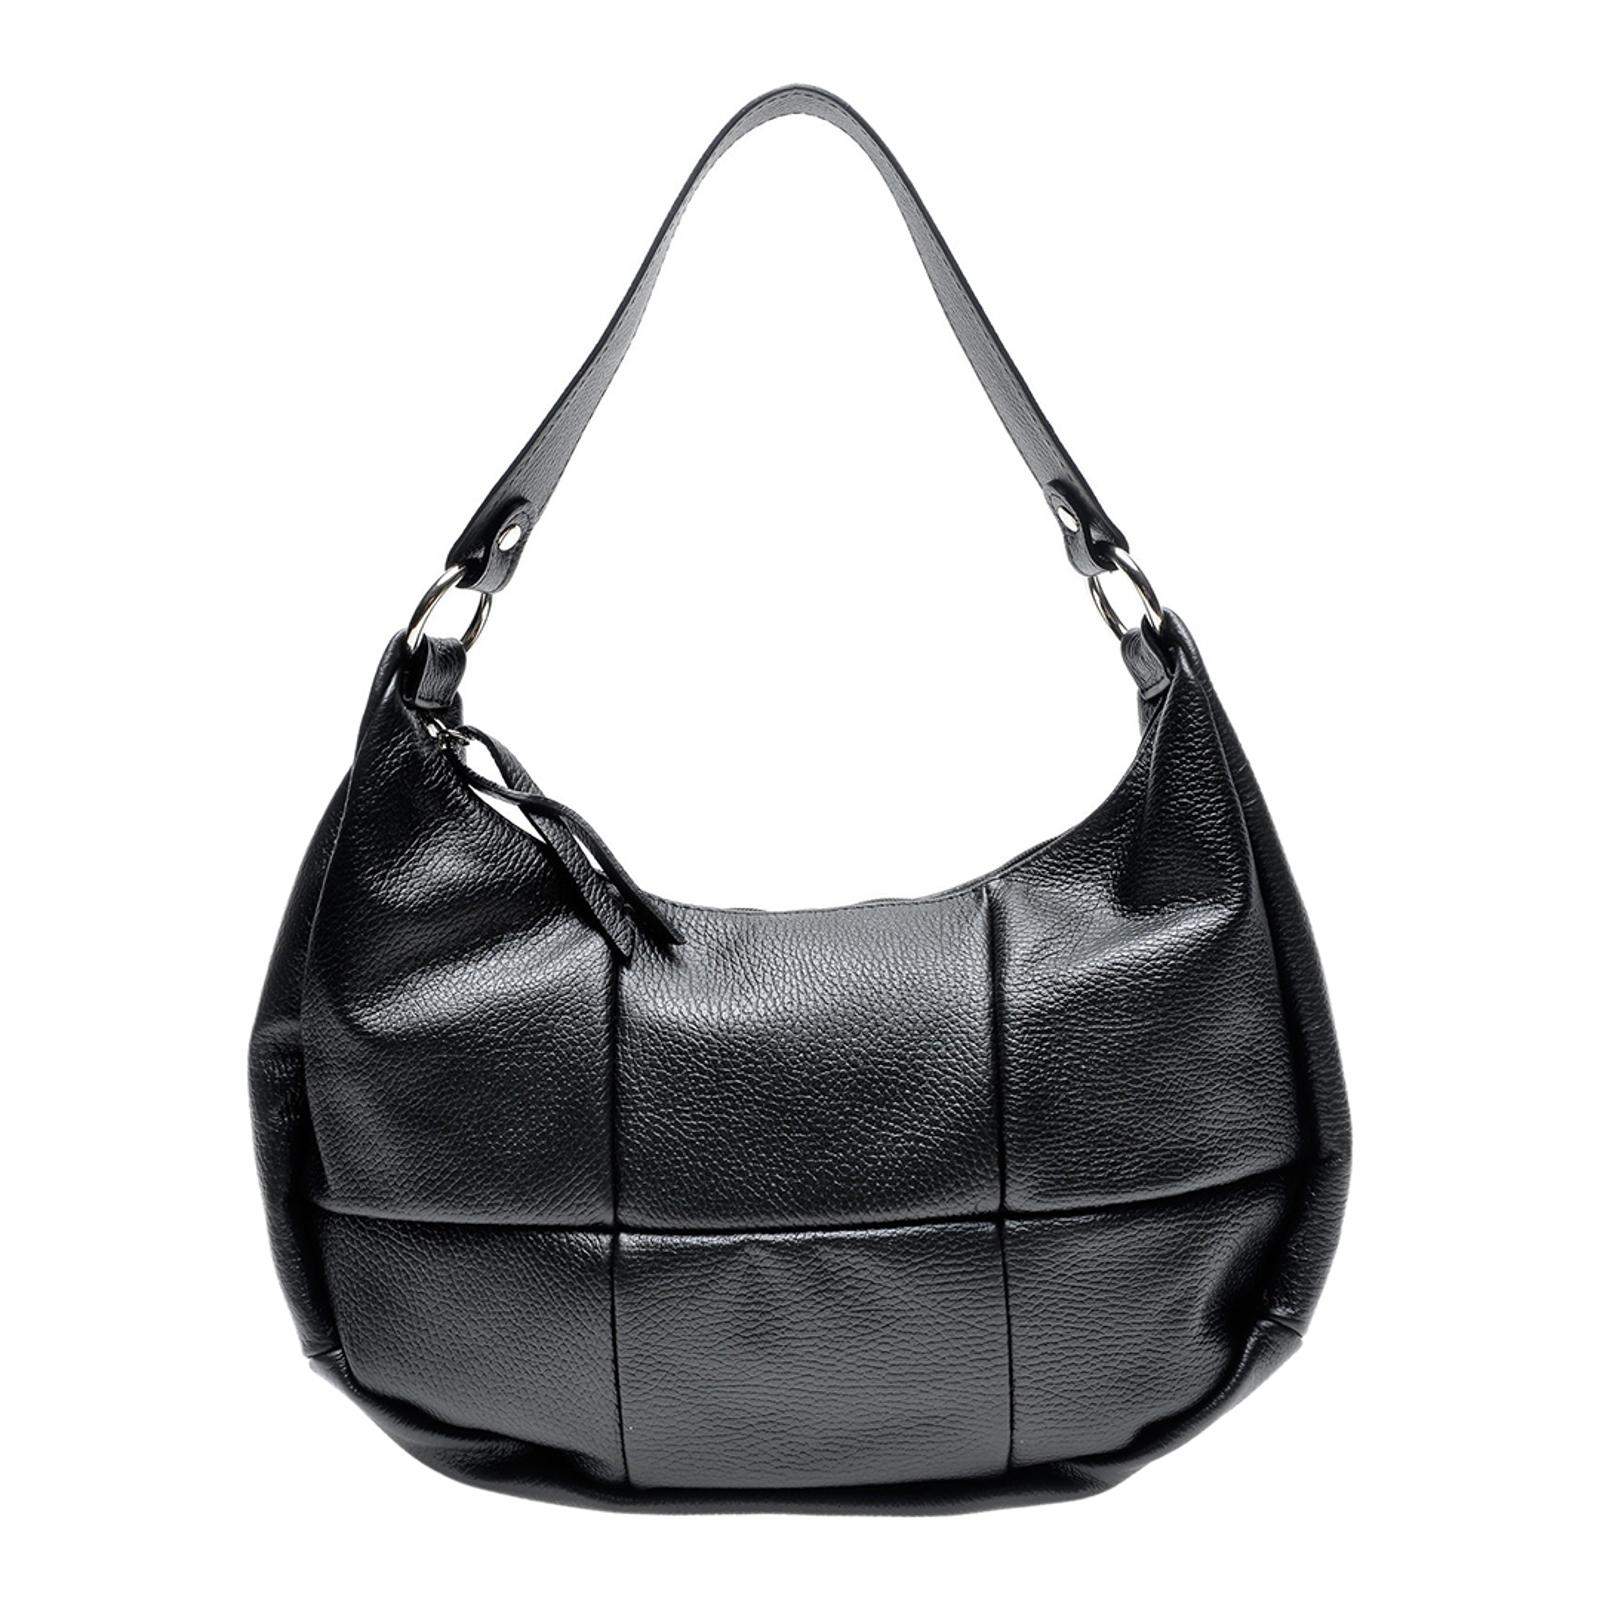 Black Leather Top Handle Handbag - BrandAlley